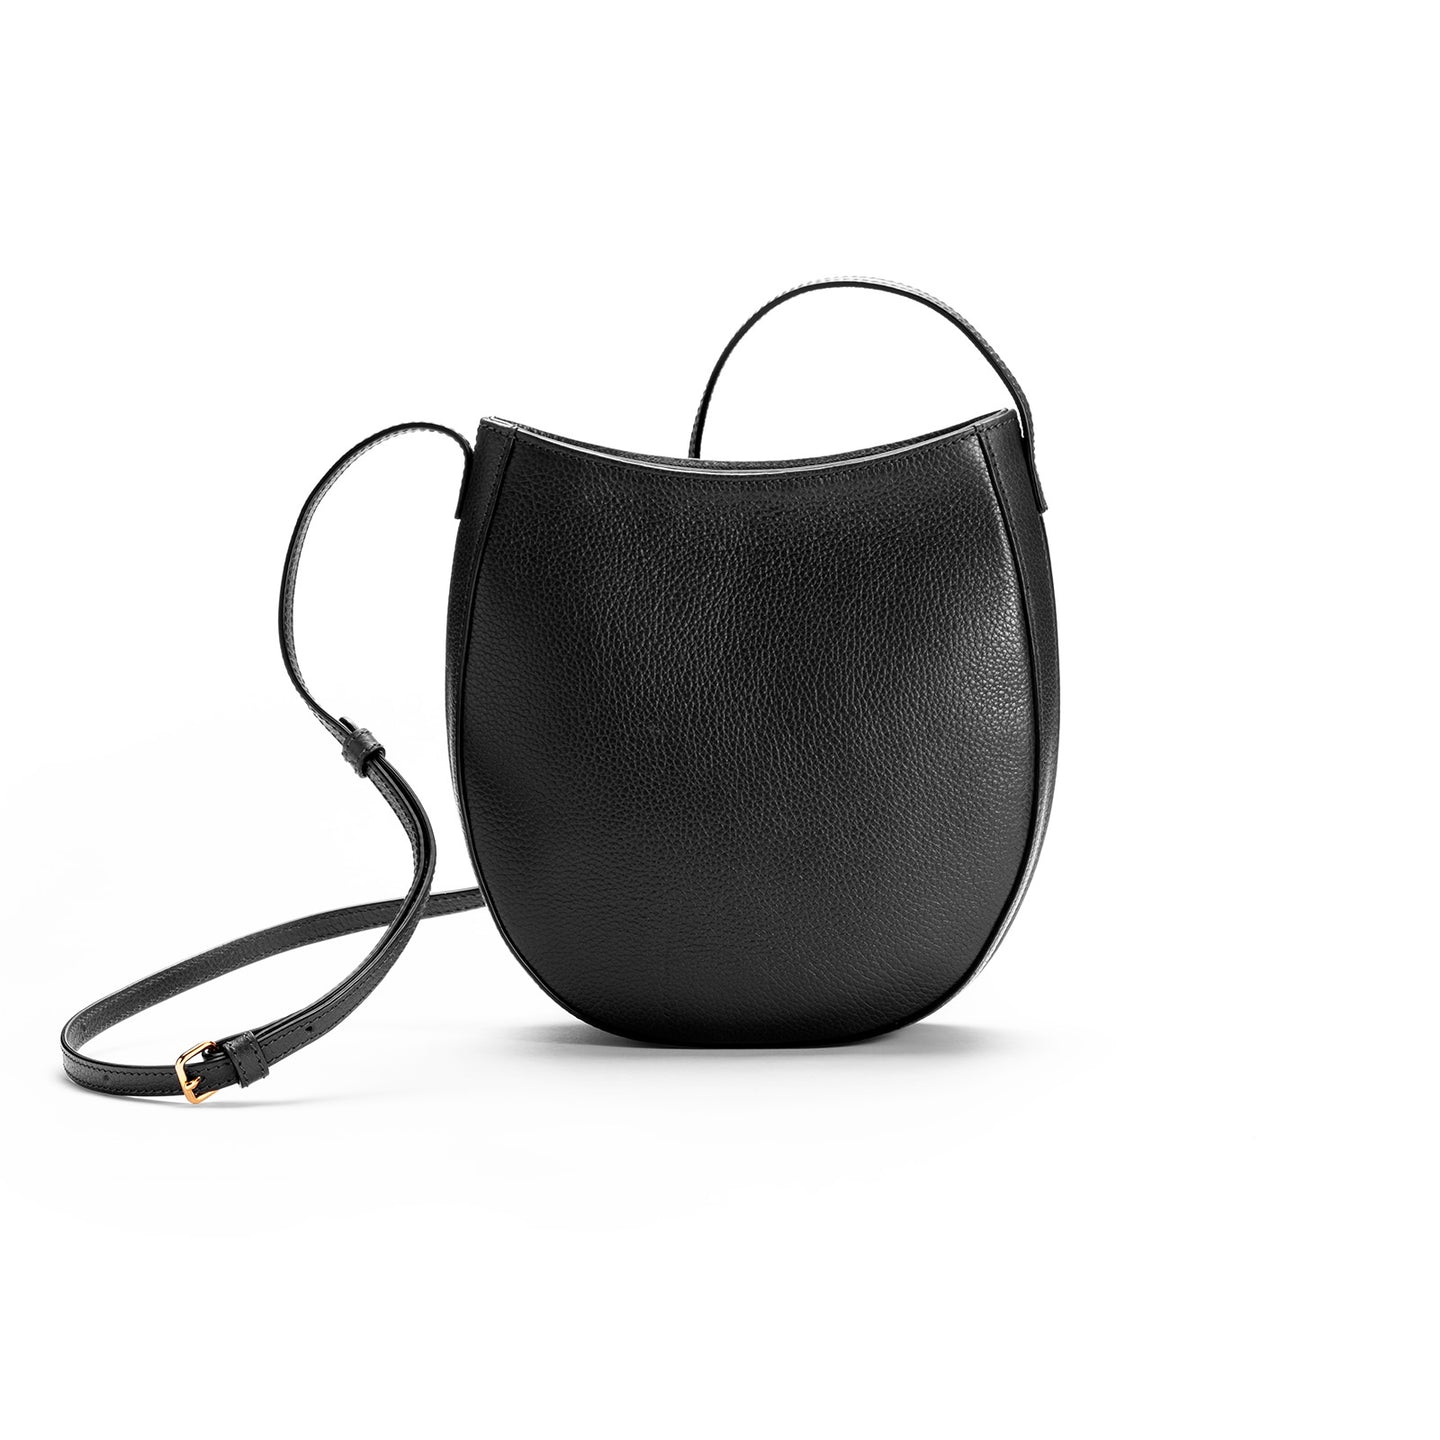 sling purse